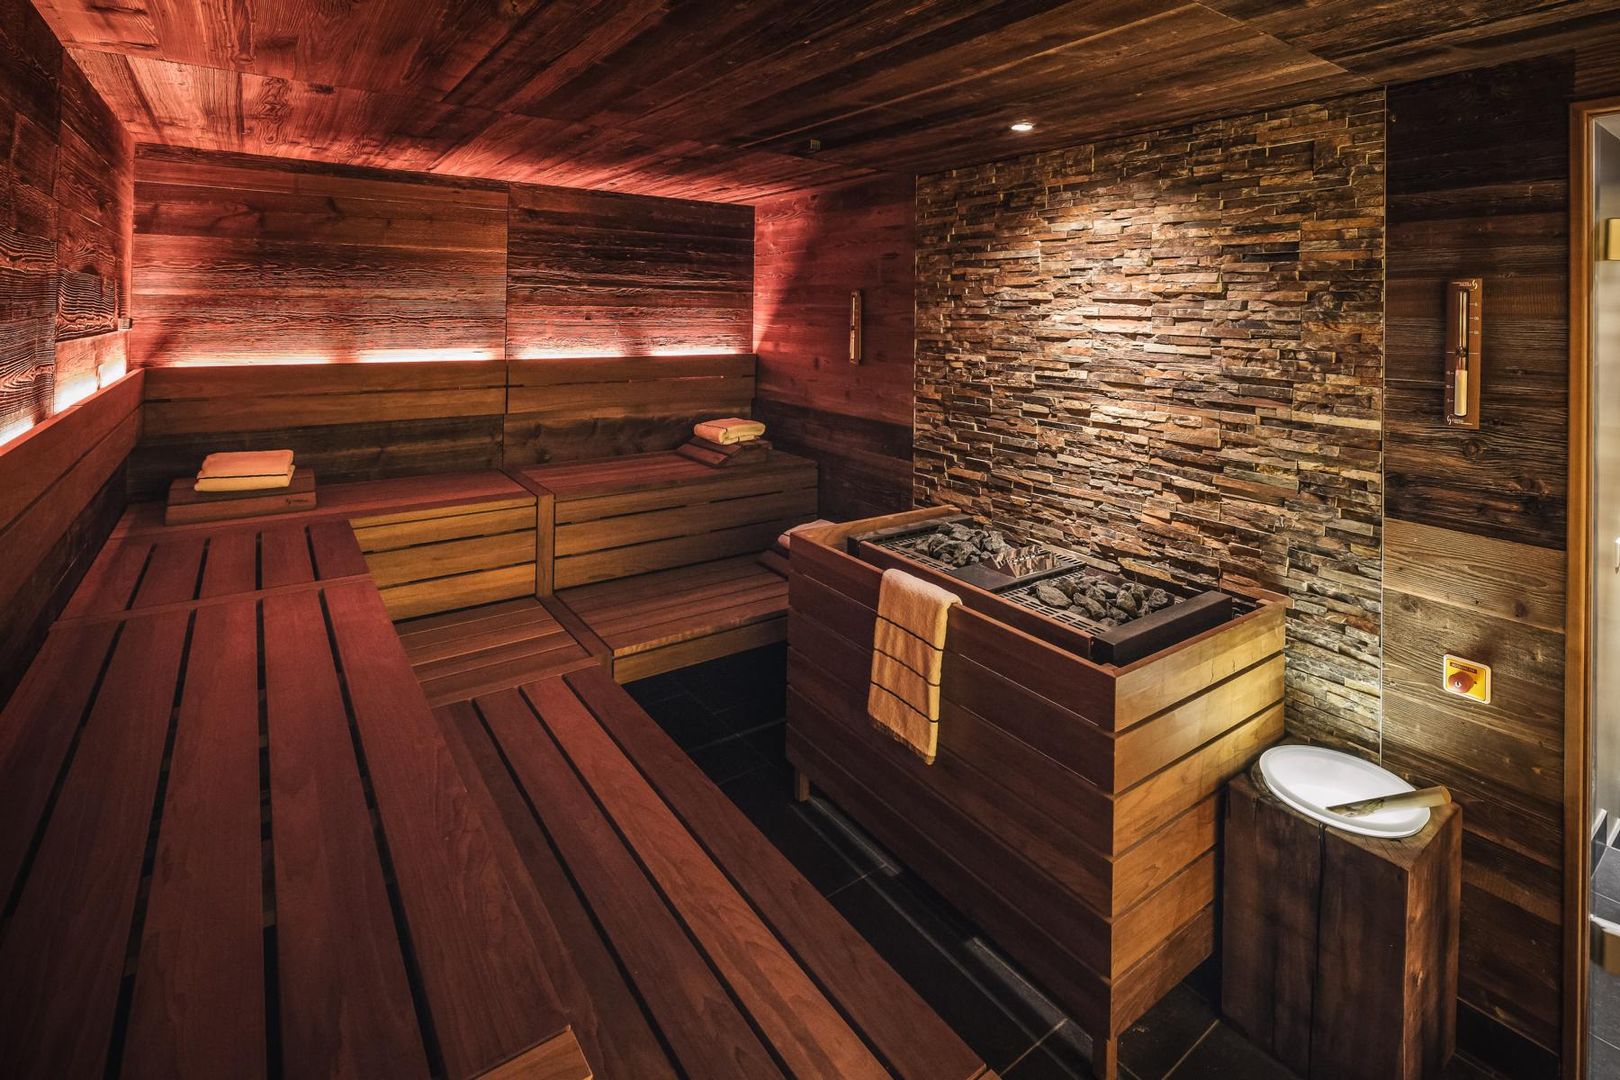 Referenz Nr. 3, corso sauna manufaktur gmbh corso sauna manufaktur gmbh Commercial spaces Stone Hotels